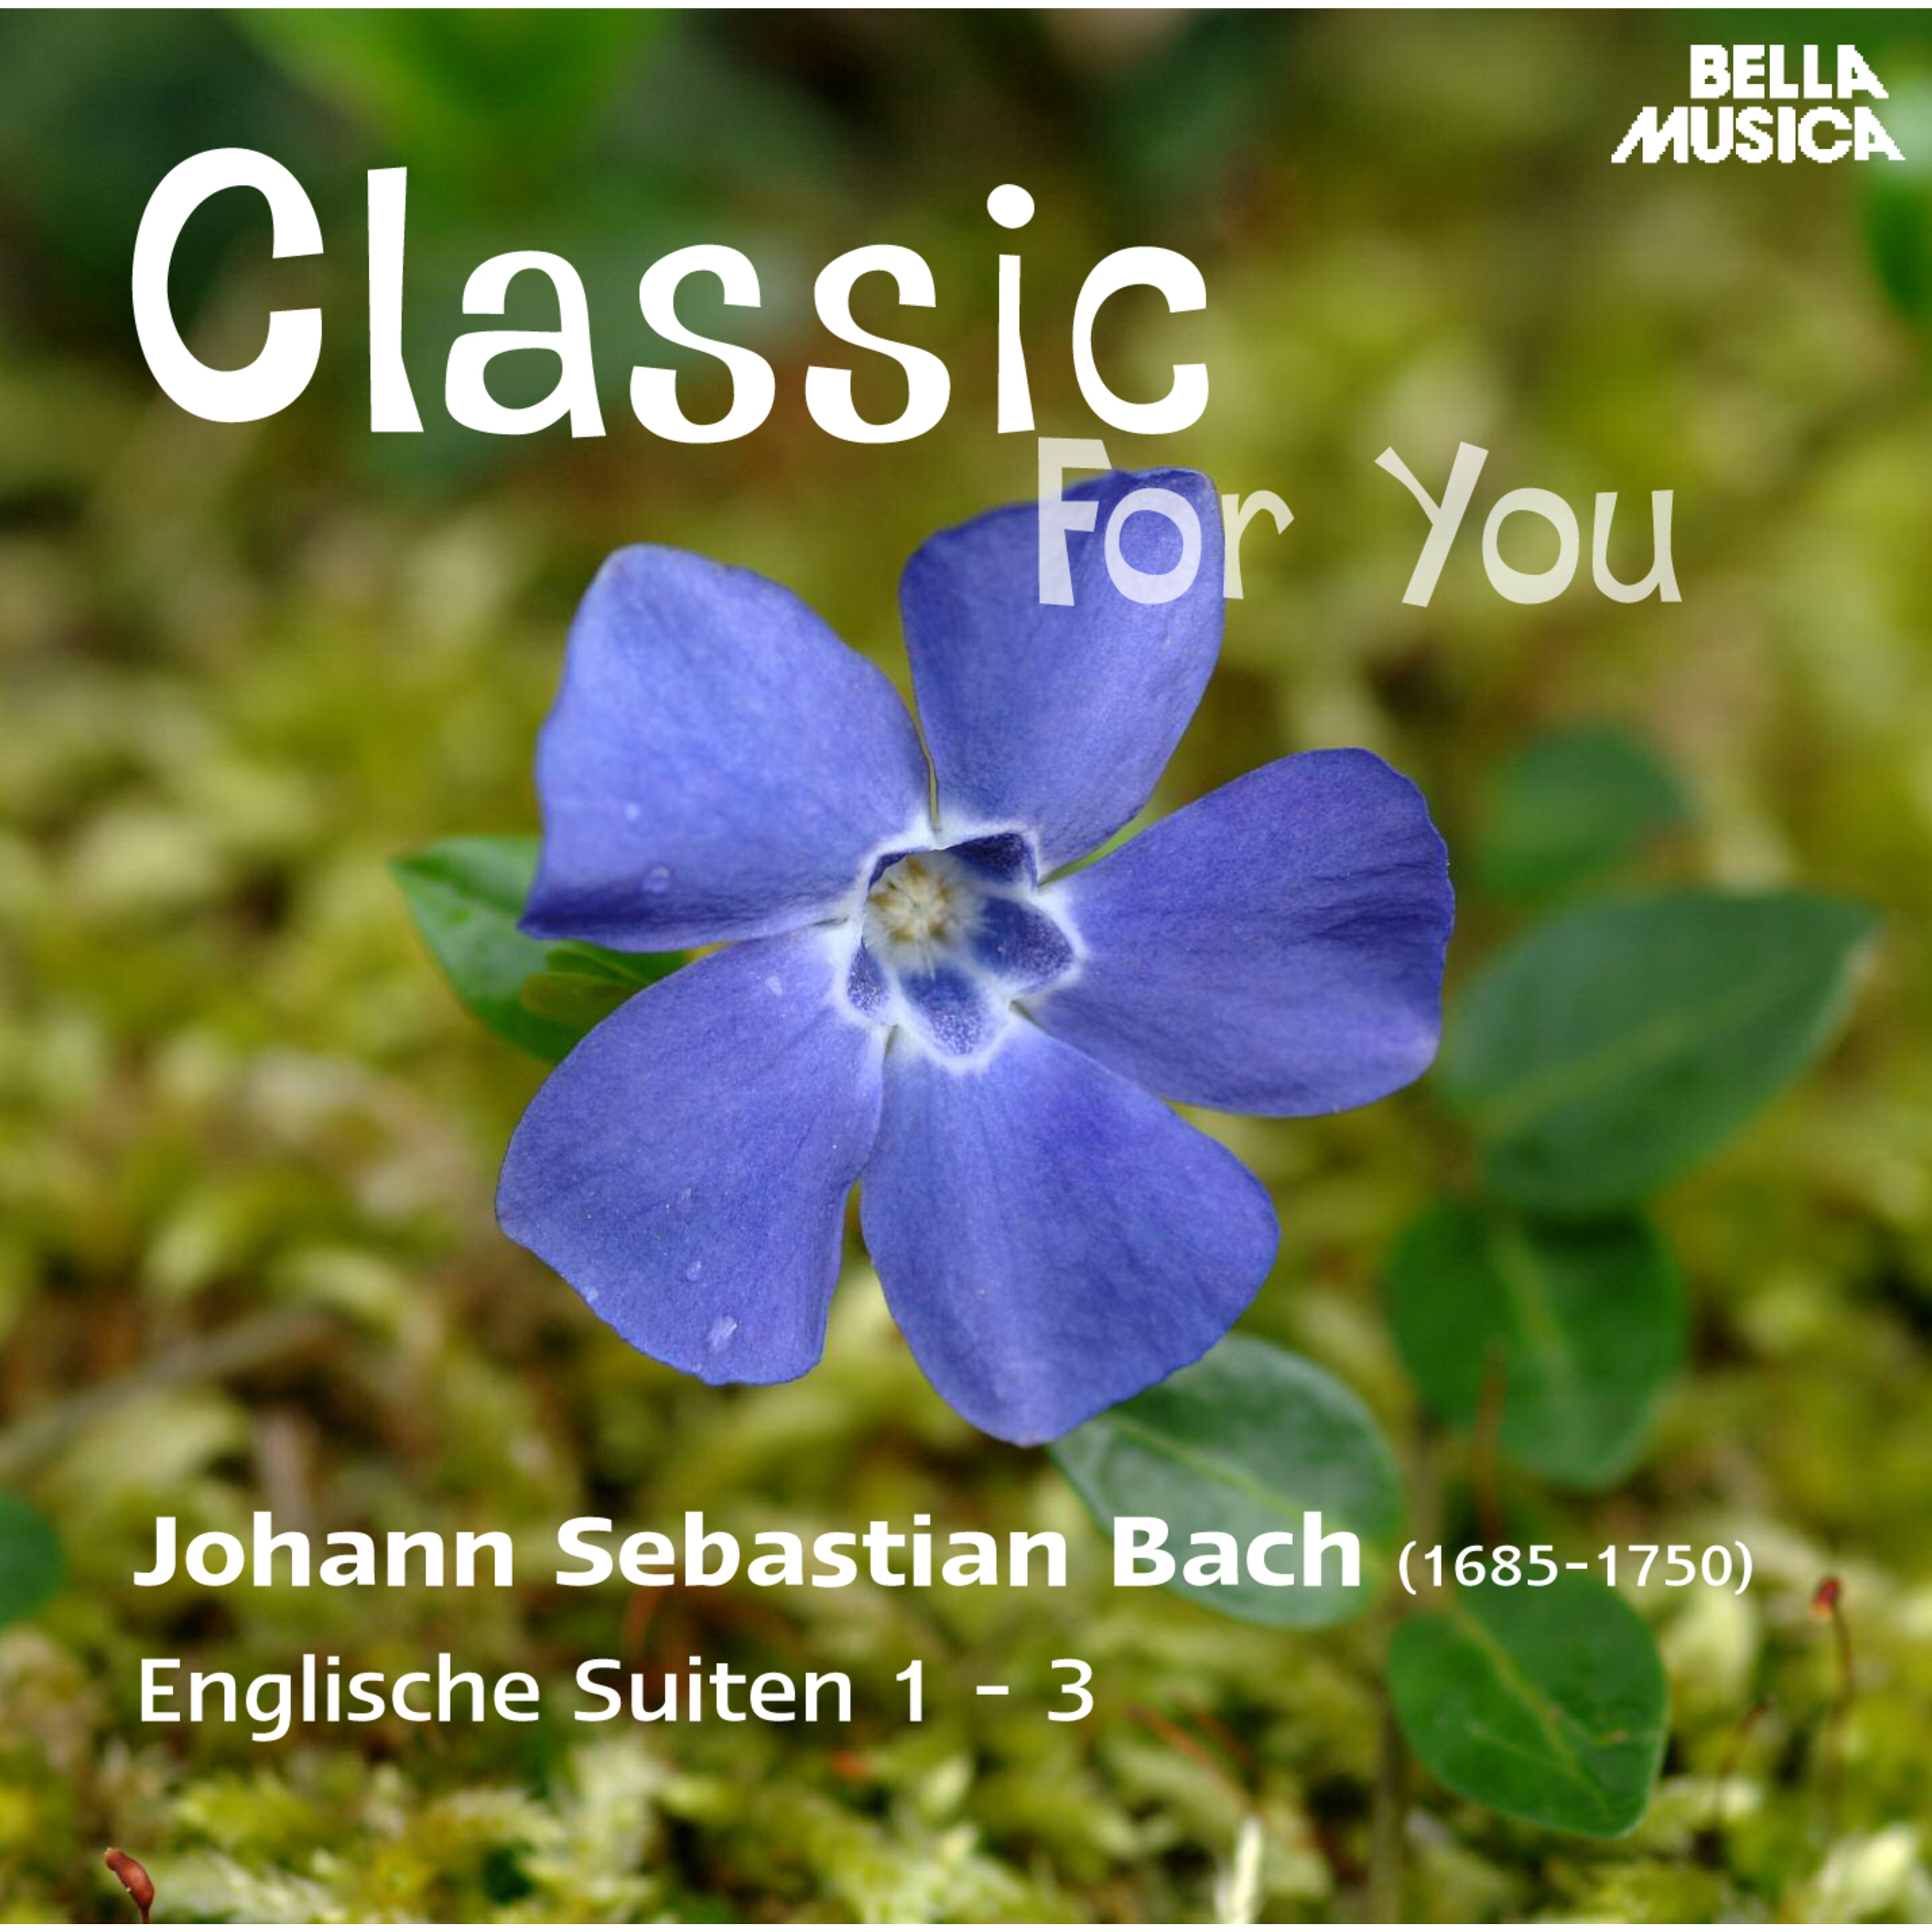 Englische Suite in A Major, No. 1, BWV 806: V. Sarabande